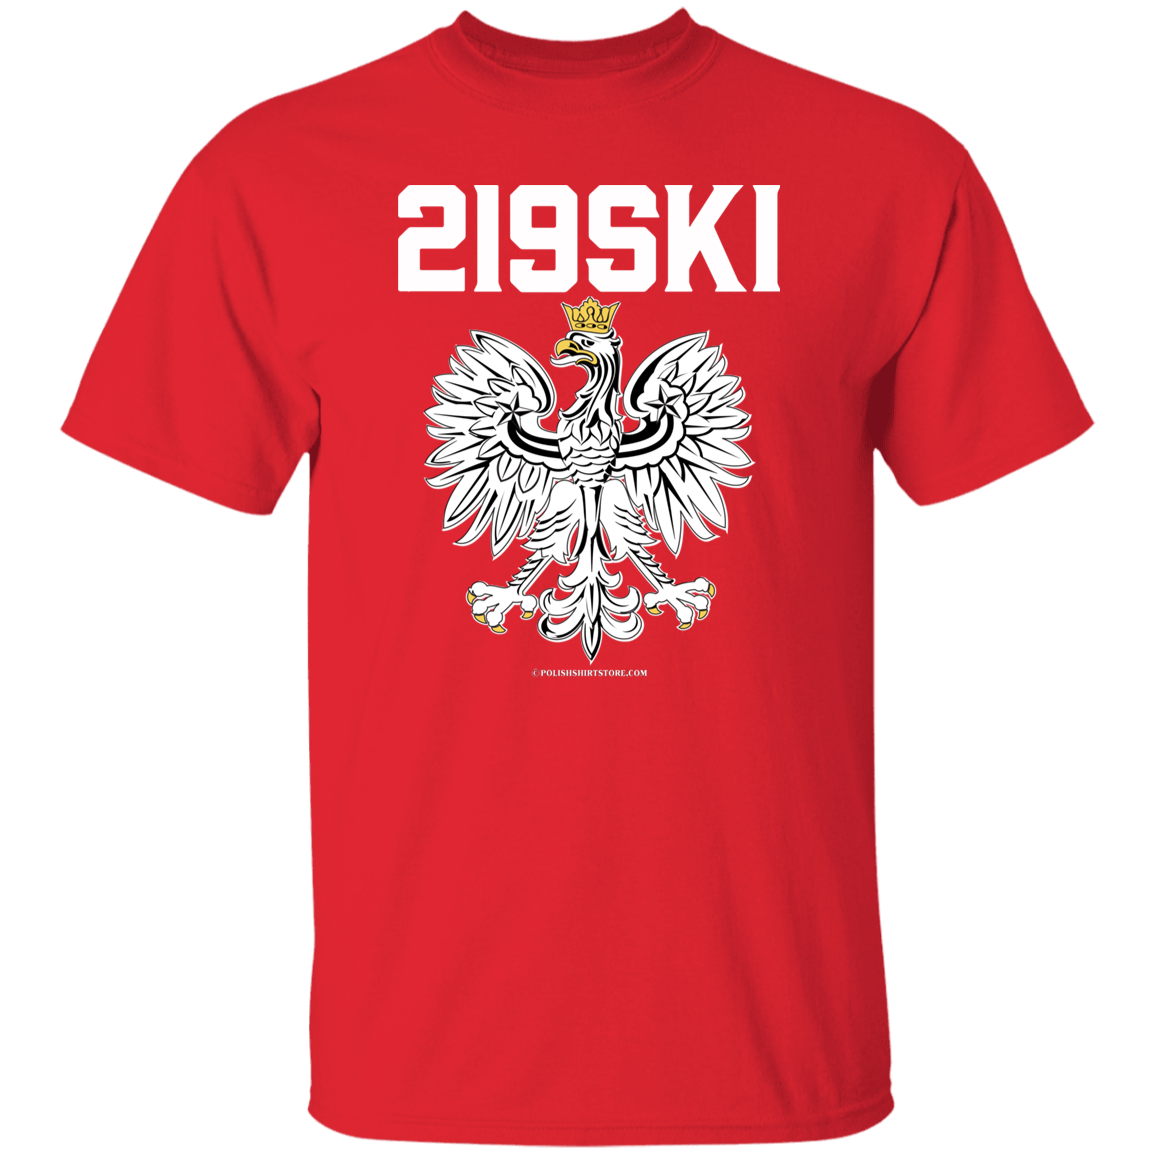 219SKI Apparel CustomCat G500 5.3 oz. T-Shirt Red S